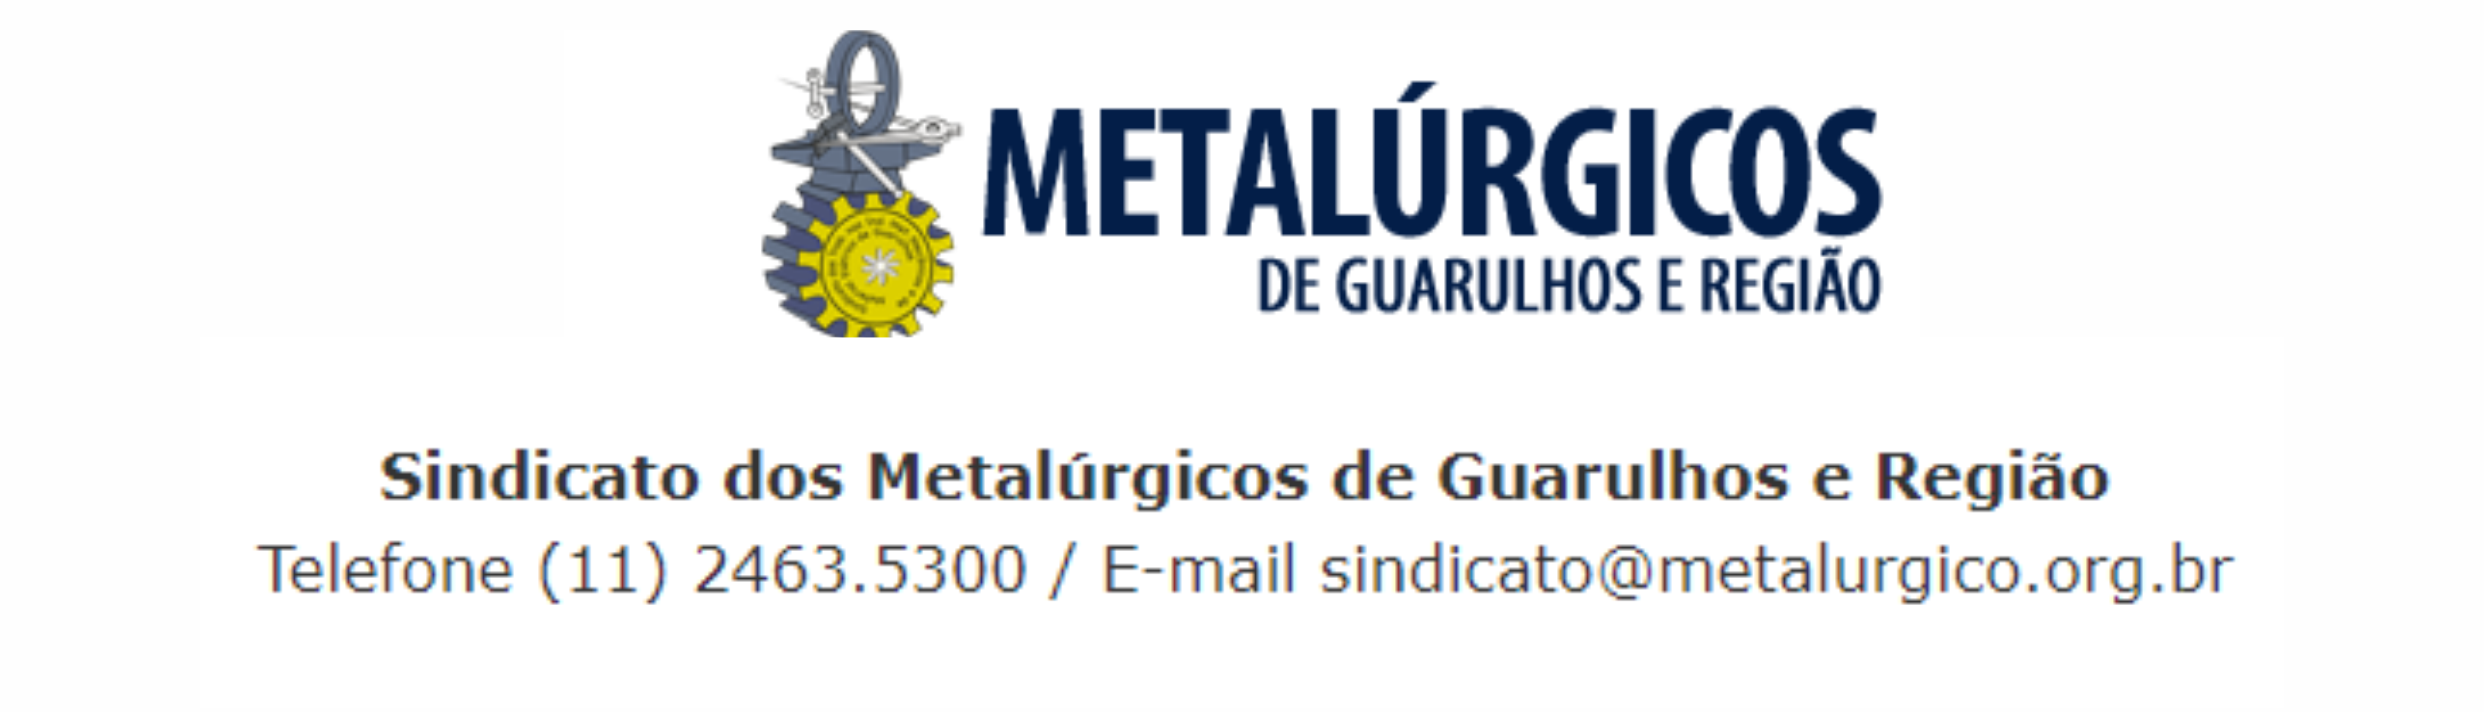 Metalurgicos 